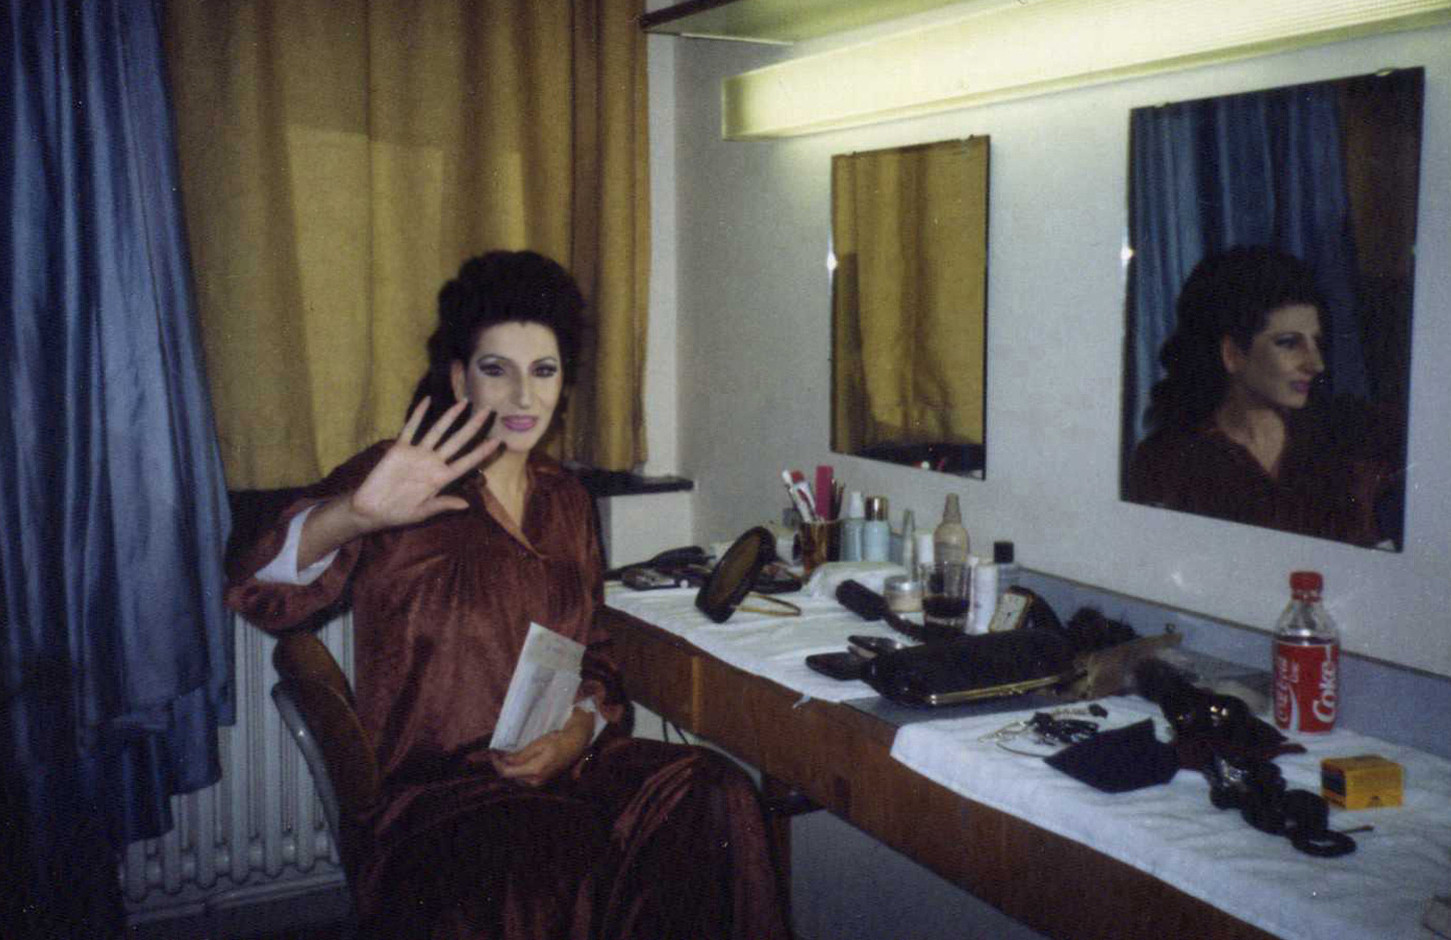 Lucia Aliberti⚘Deutsche Oper Berlin⚘Berlin⚘Dressing Room⚘Makeup Session⚘Opera⚘"Lucia di Lammermoor"⚘:http://www.luciaaliberti.it #luciaaliberti #deutscheoperberlin #berlin #opera #luciadilammermoor #dressingroom #makeupsession